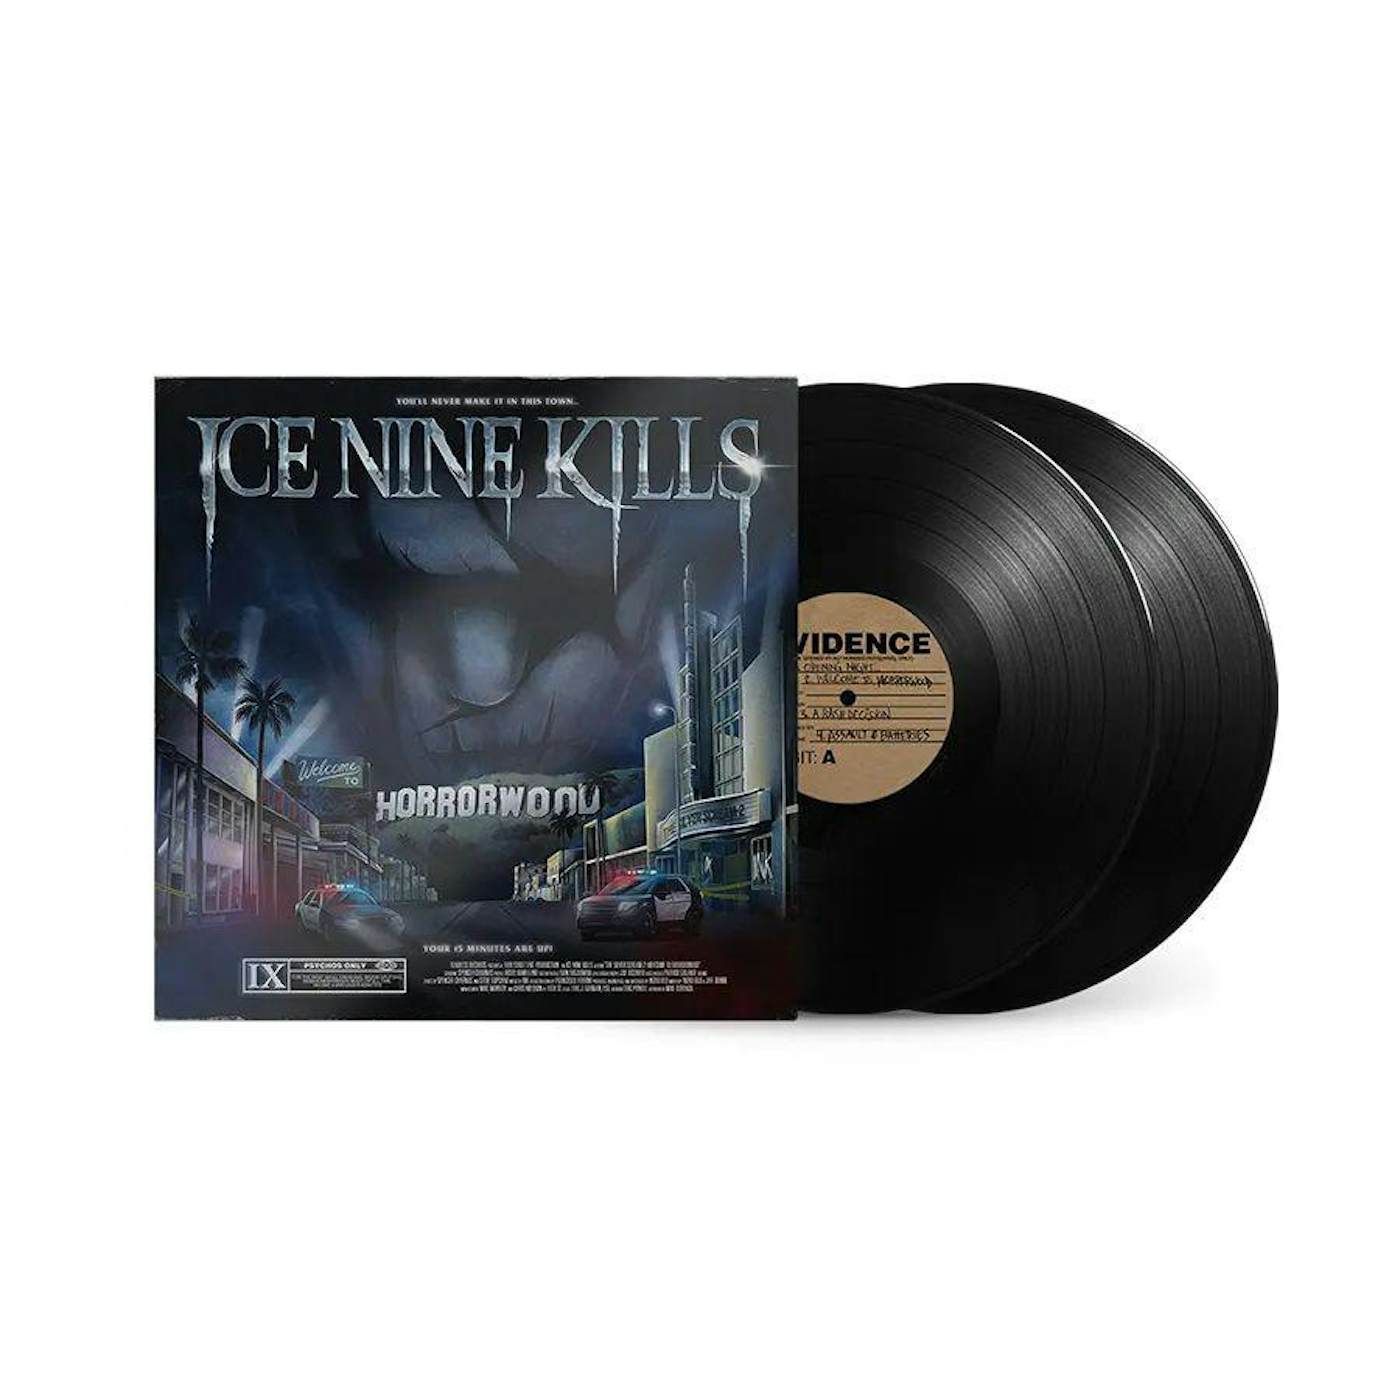 Ice Nine Kills Welcome To Horrorwood: The Silver Scream 2 (2LP) Vinyl Record